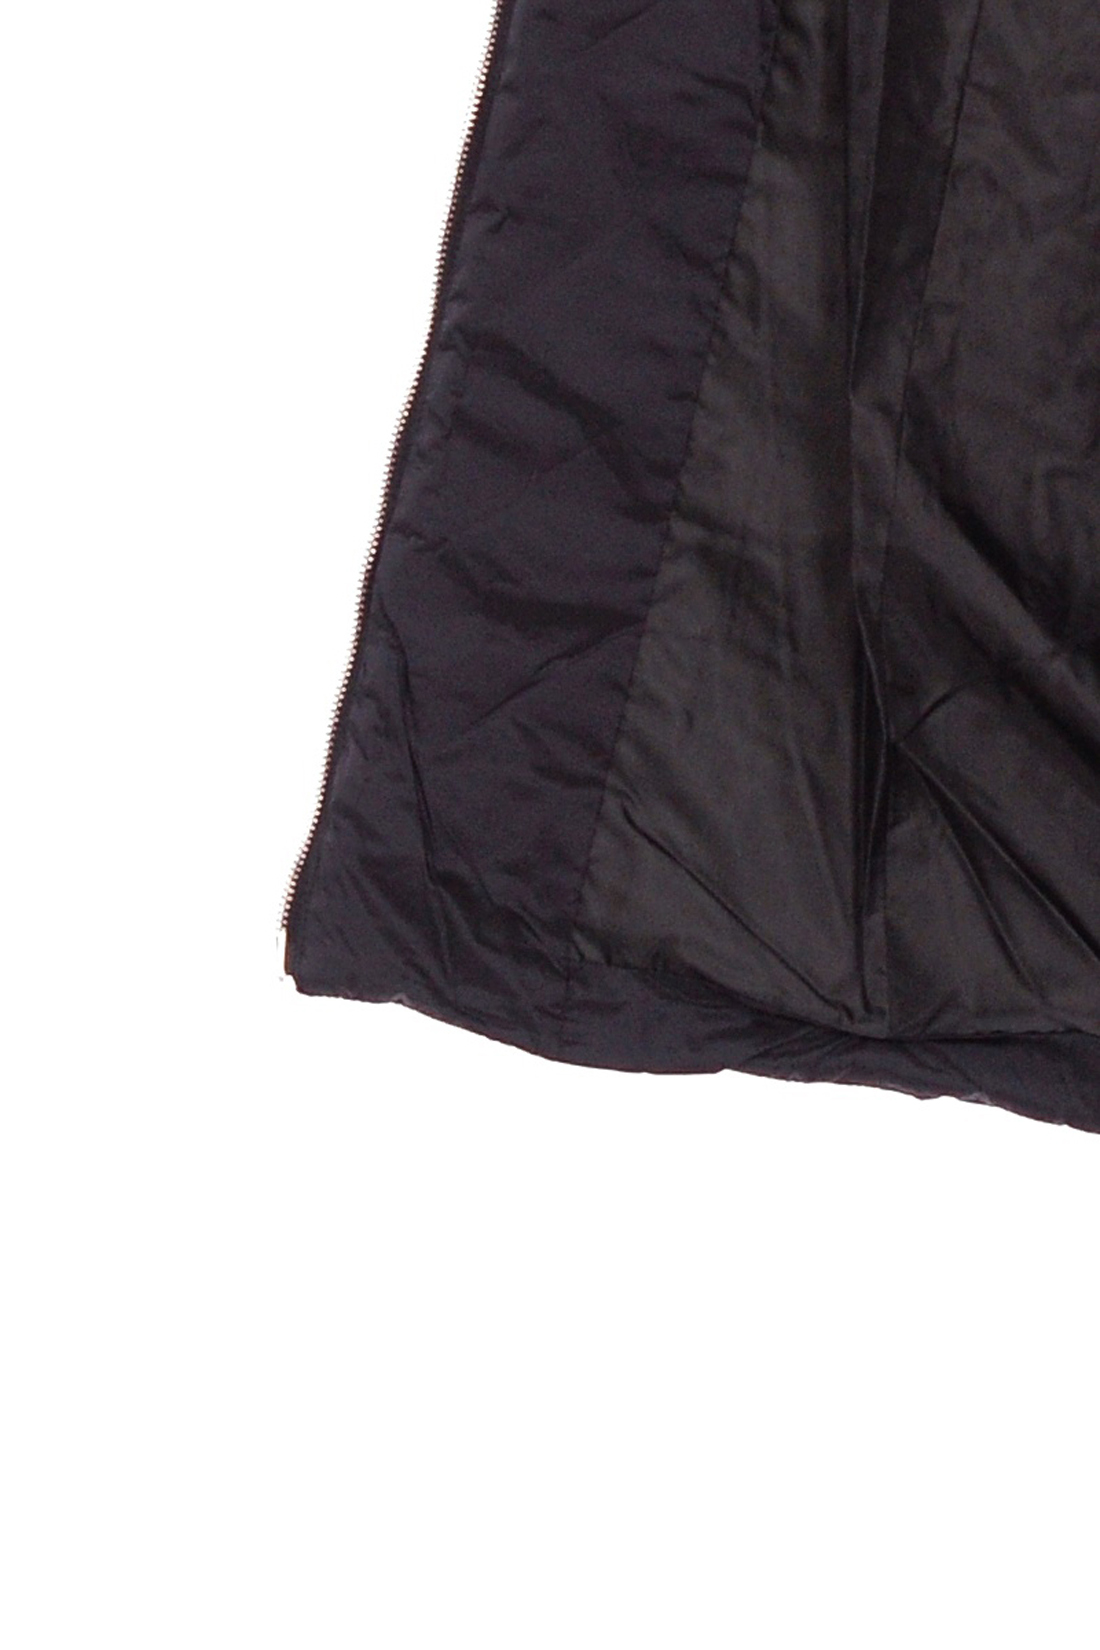 Длинная стёганая куртка (арт. baon B038547), размер L, цвет черный Длинная стёганая куртка (арт. baon B038547) - фото 4